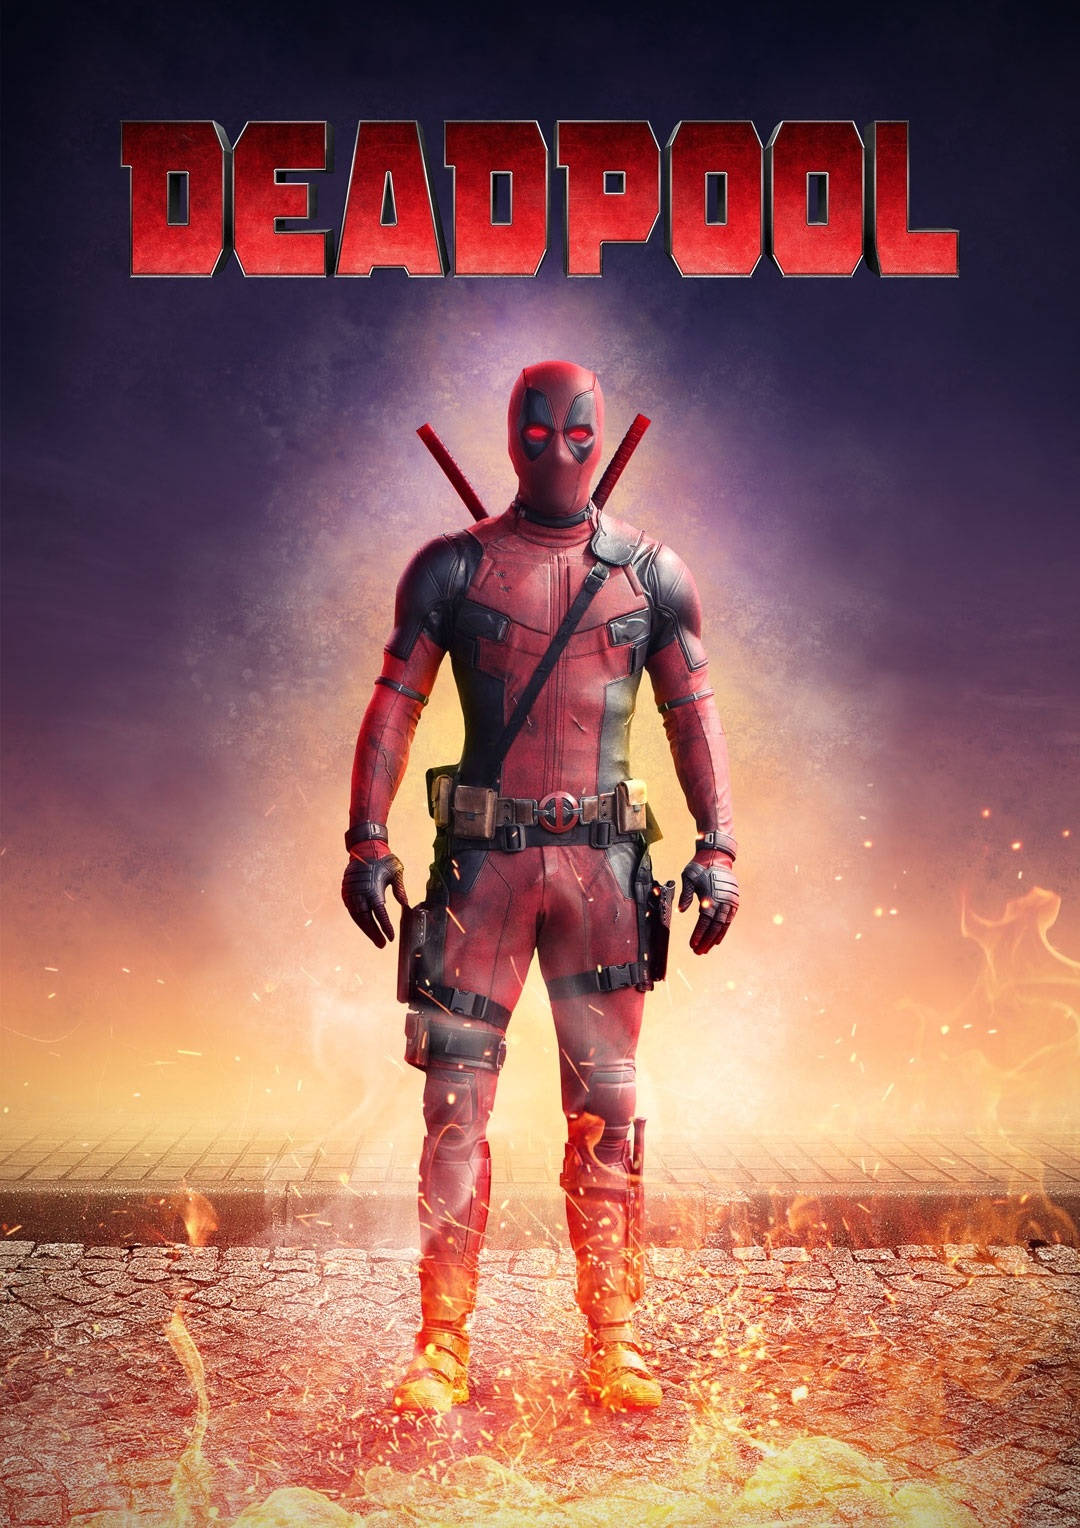 Deadpoolfilm Feuer Poster Fanart Wallpaper